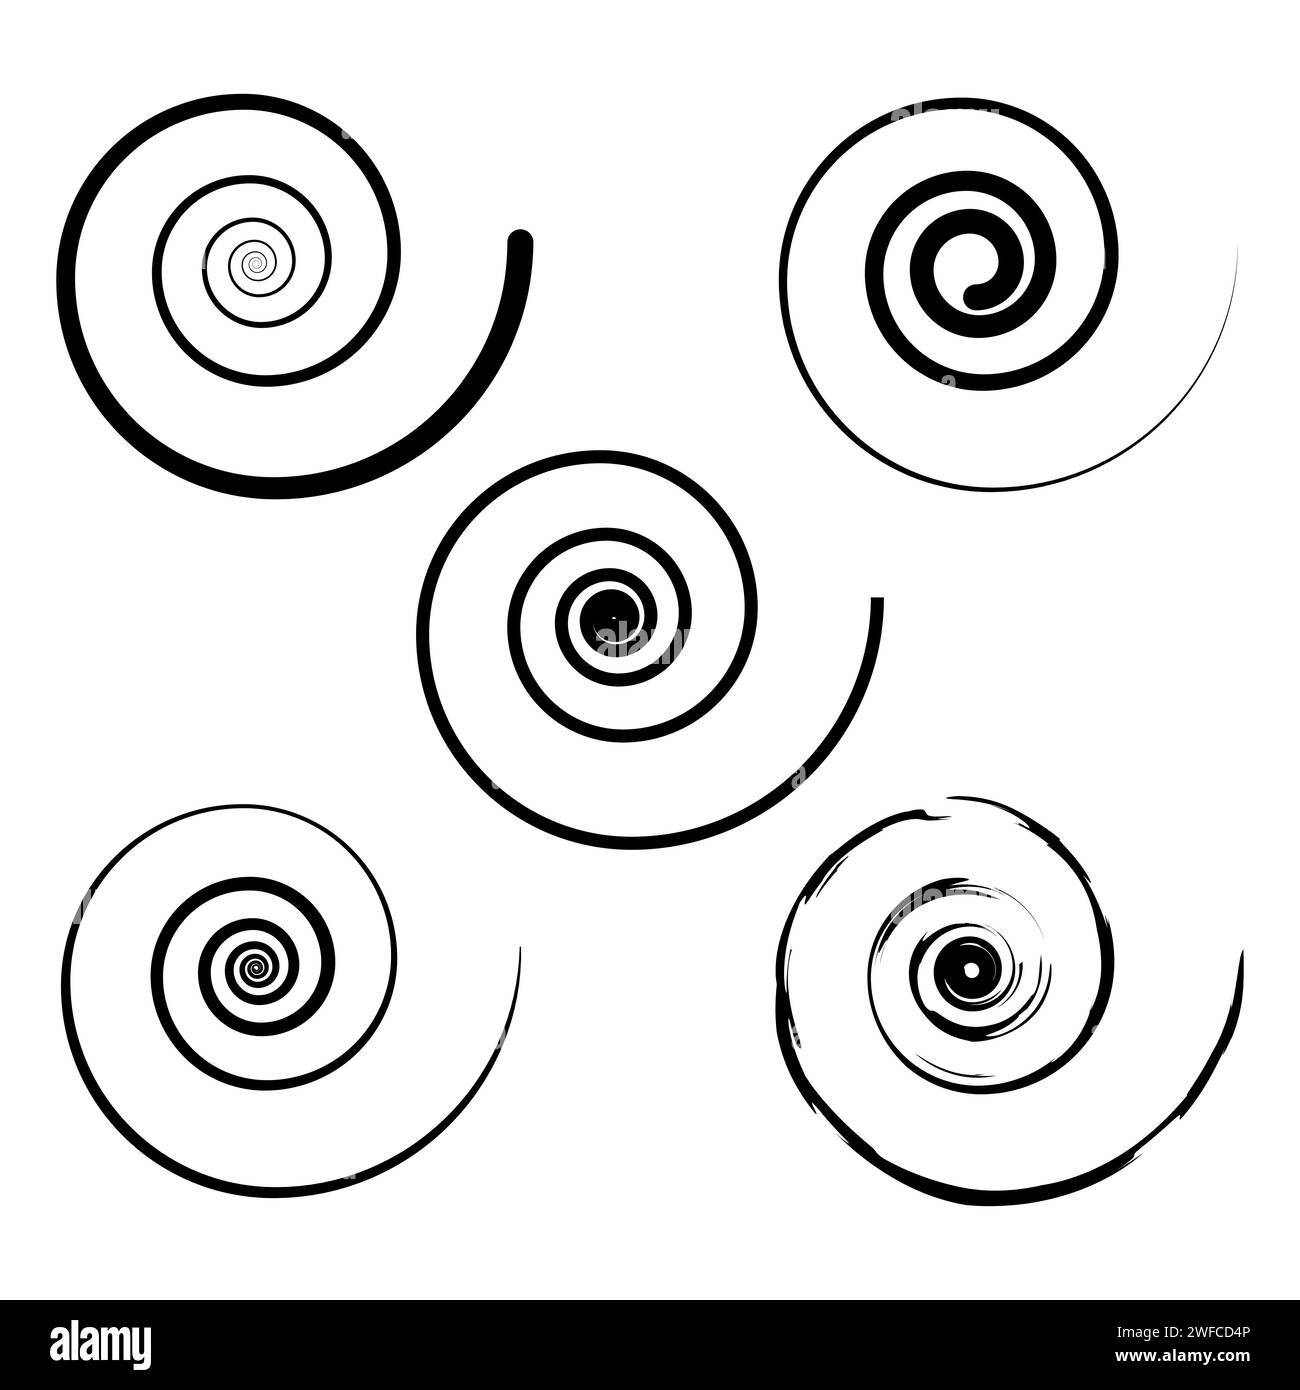 brush spiral set. Round shape. Grunge texture background. Vector illustration. stock image. EPS 10. Stock Vector